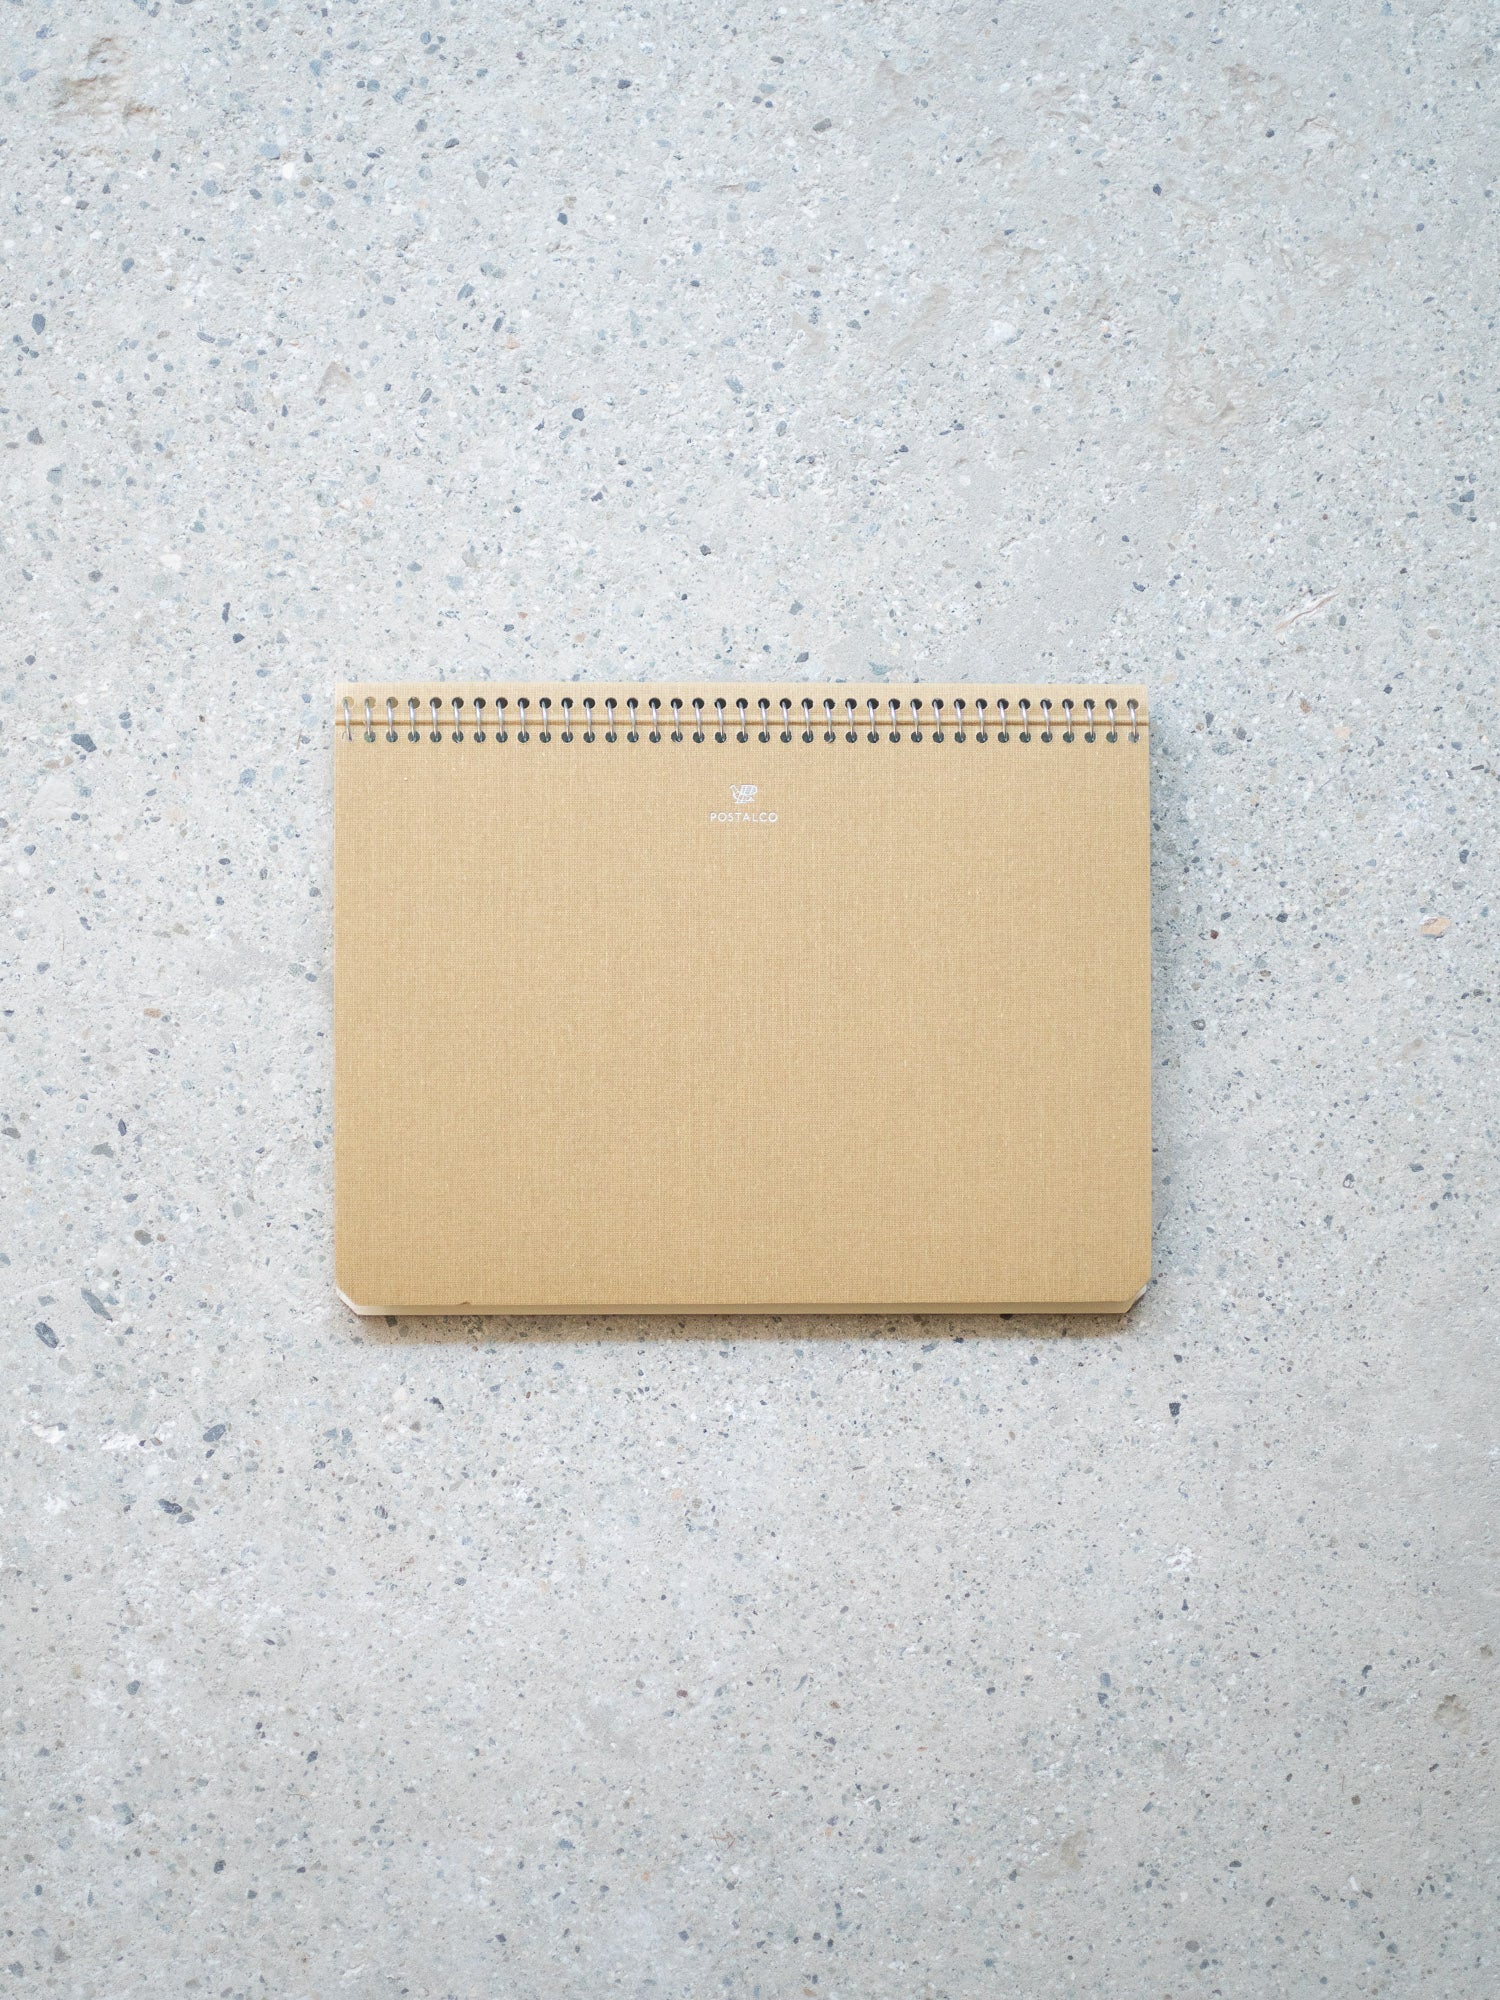 Postalco Notebook – A5